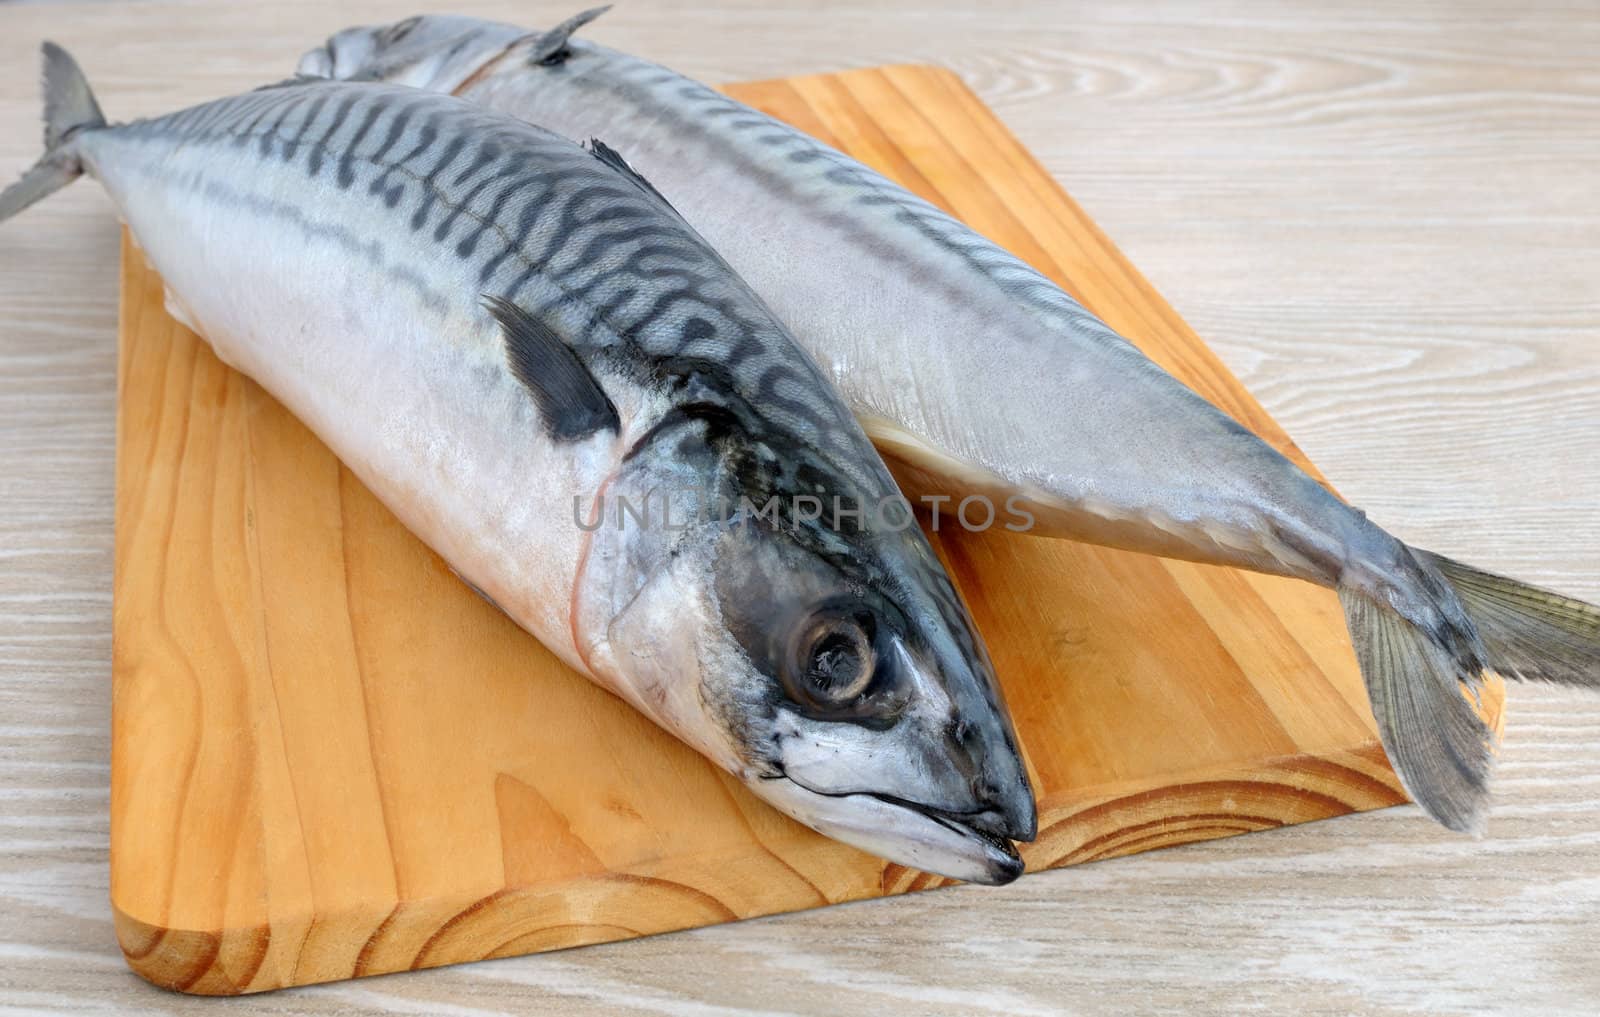 Fresh mackerel on a wooden board close-up